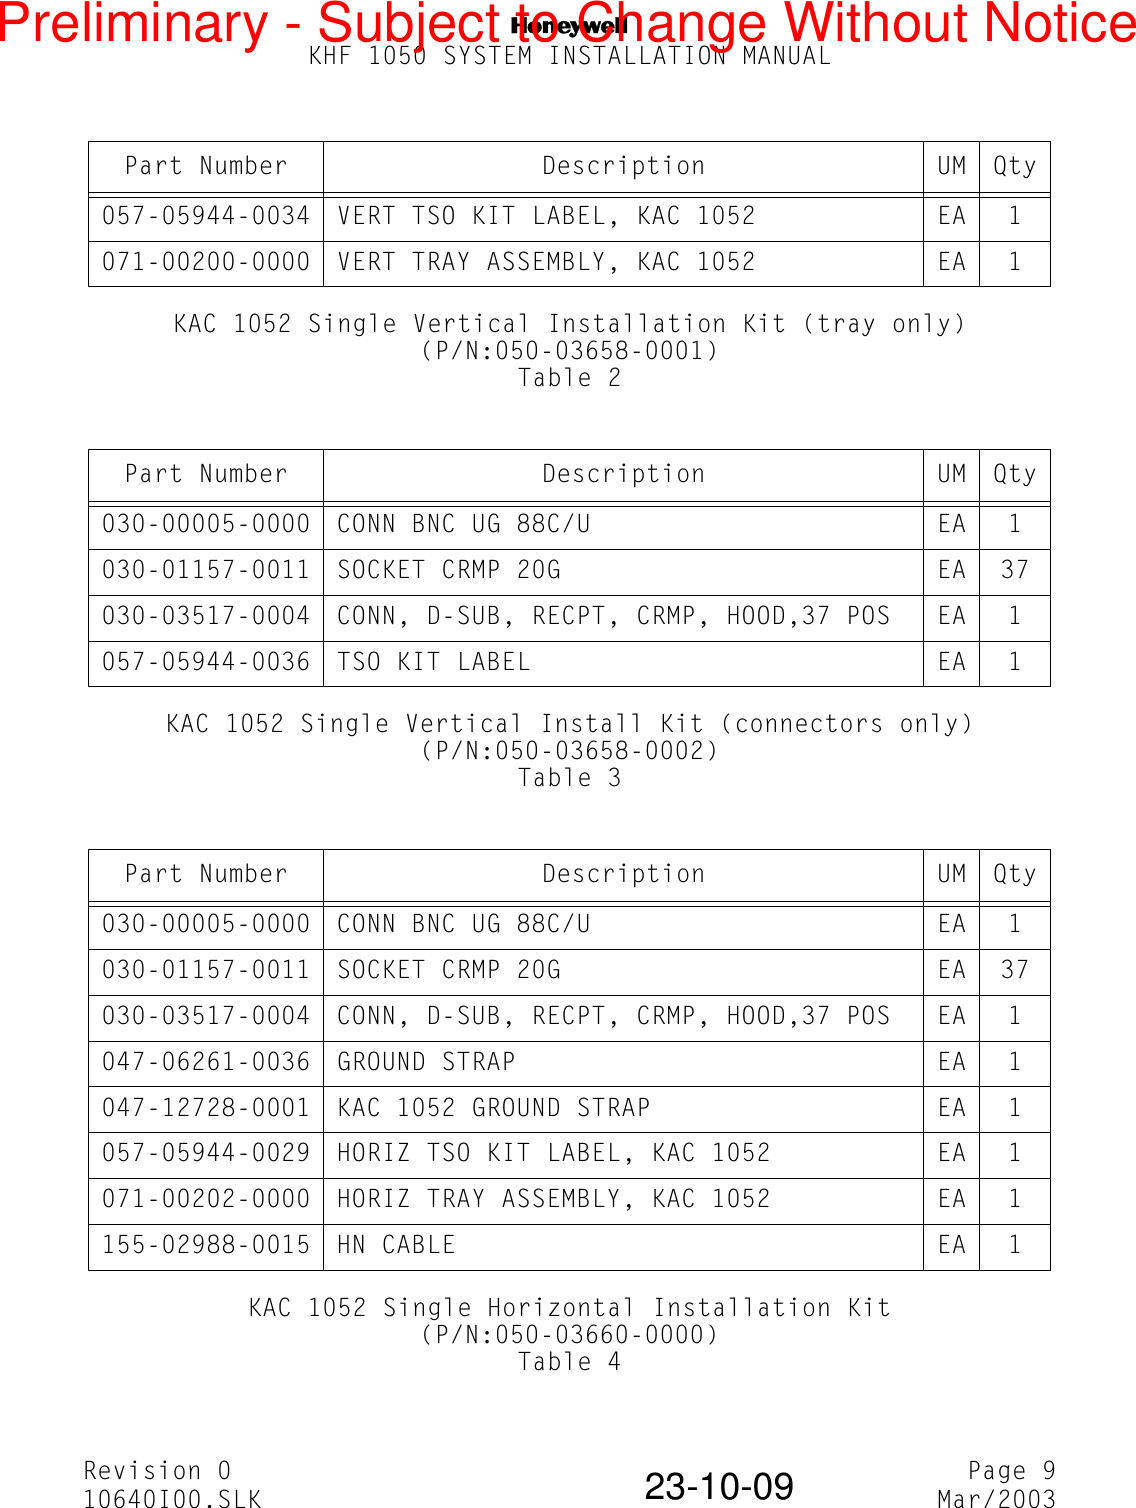 NKHF 1050 SYSTEM INSTALLATION MANUALRevision 0 Page 910640I00.SLK Mar/200323-10-09KAC 1052 Single Vertical Installation Kit (tray only)(P/N:050-03658-0001)Table 2KAC 1052 Single Vertical Install Kit (connectors only)(P/N:050-03658-0002)Table 3KAC 1052 Single Horizontal Installation Kit(P/N:050-03660-0000)Table 4Part Number Description UM Qty057-05944-0034 VERT TSO KIT LABEL, KAC 1052 EA 1071-00200-0000 VERT TRAY ASSEMBLY, KAC 1052 EA 1Part Number Description UM Qty030-00005-0000 CONN BNC UG 88C/U EA 1030-01157-0011 SOCKET CRMP 20G EA 37030-03517-0004 CONN, D-SUB, RECPT, CRMP, HOOD,37 POS EA 1057-05944-0036 TSO KIT LABEL EA 1Part Number Description UM Qty030-00005-0000 CONN BNC UG 88C/U EA 1030-01157-0011 SOCKET CRMP 20G EA 37030-03517-0004 CONN, D-SUB, RECPT, CRMP, HOOD,37 POS EA 1047-06261-0036 GROUND STRAP EA 1047-12728-0001 KAC 1052 GROUND STRAP EA 1057-05944-0029 HORIZ TSO KIT LABEL, KAC 1052 EA 1071-00202-0000 HORIZ TRAY ASSEMBLY, KAC 1052 EA 1155-02988-0015 HN CABLE EA 1Preliminary - Subject to Change Without Notice